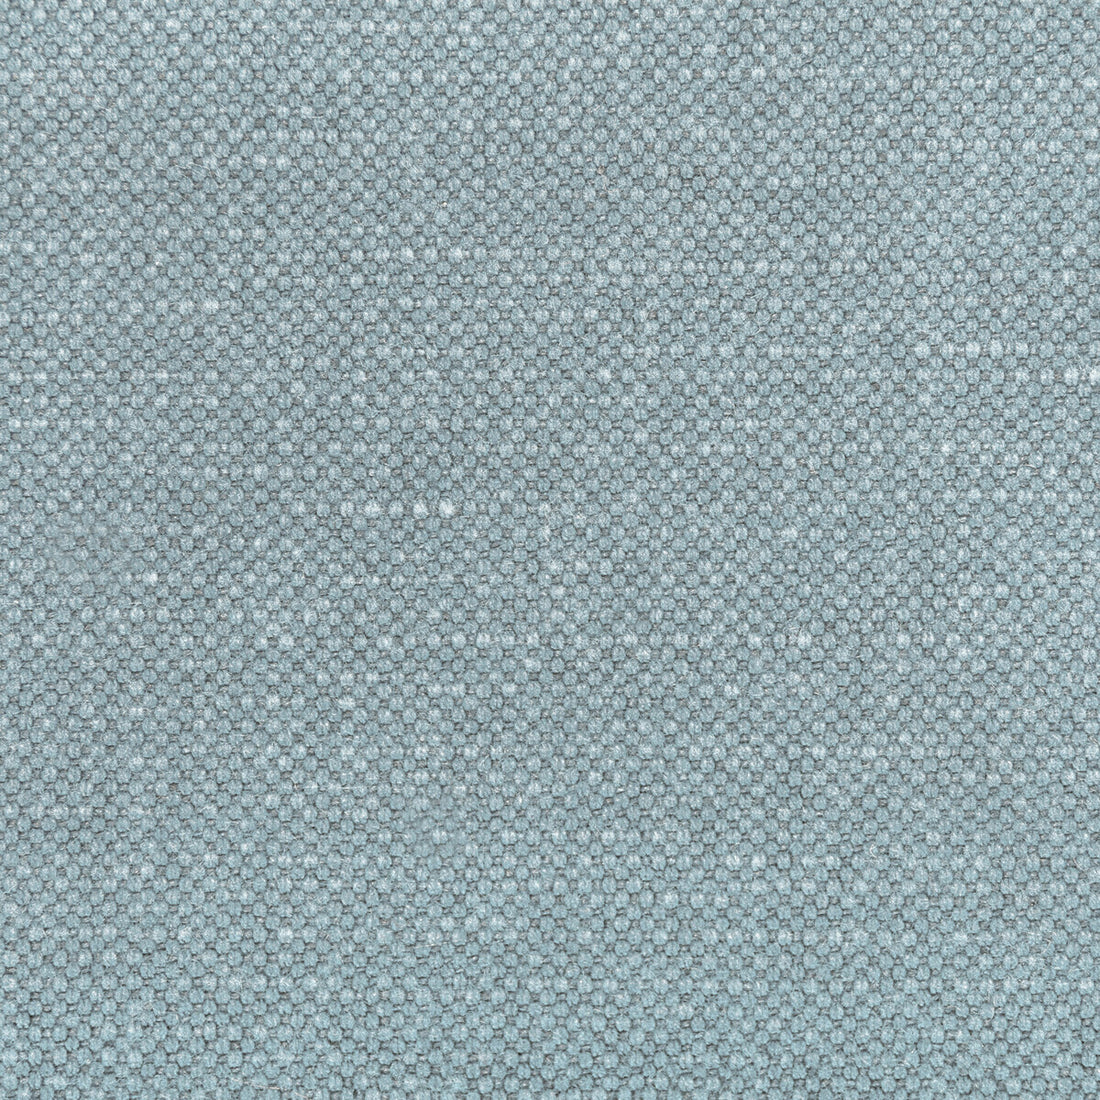 Carson fabric in horizon color - pattern 36282.1511.0 - by Kravet Basics